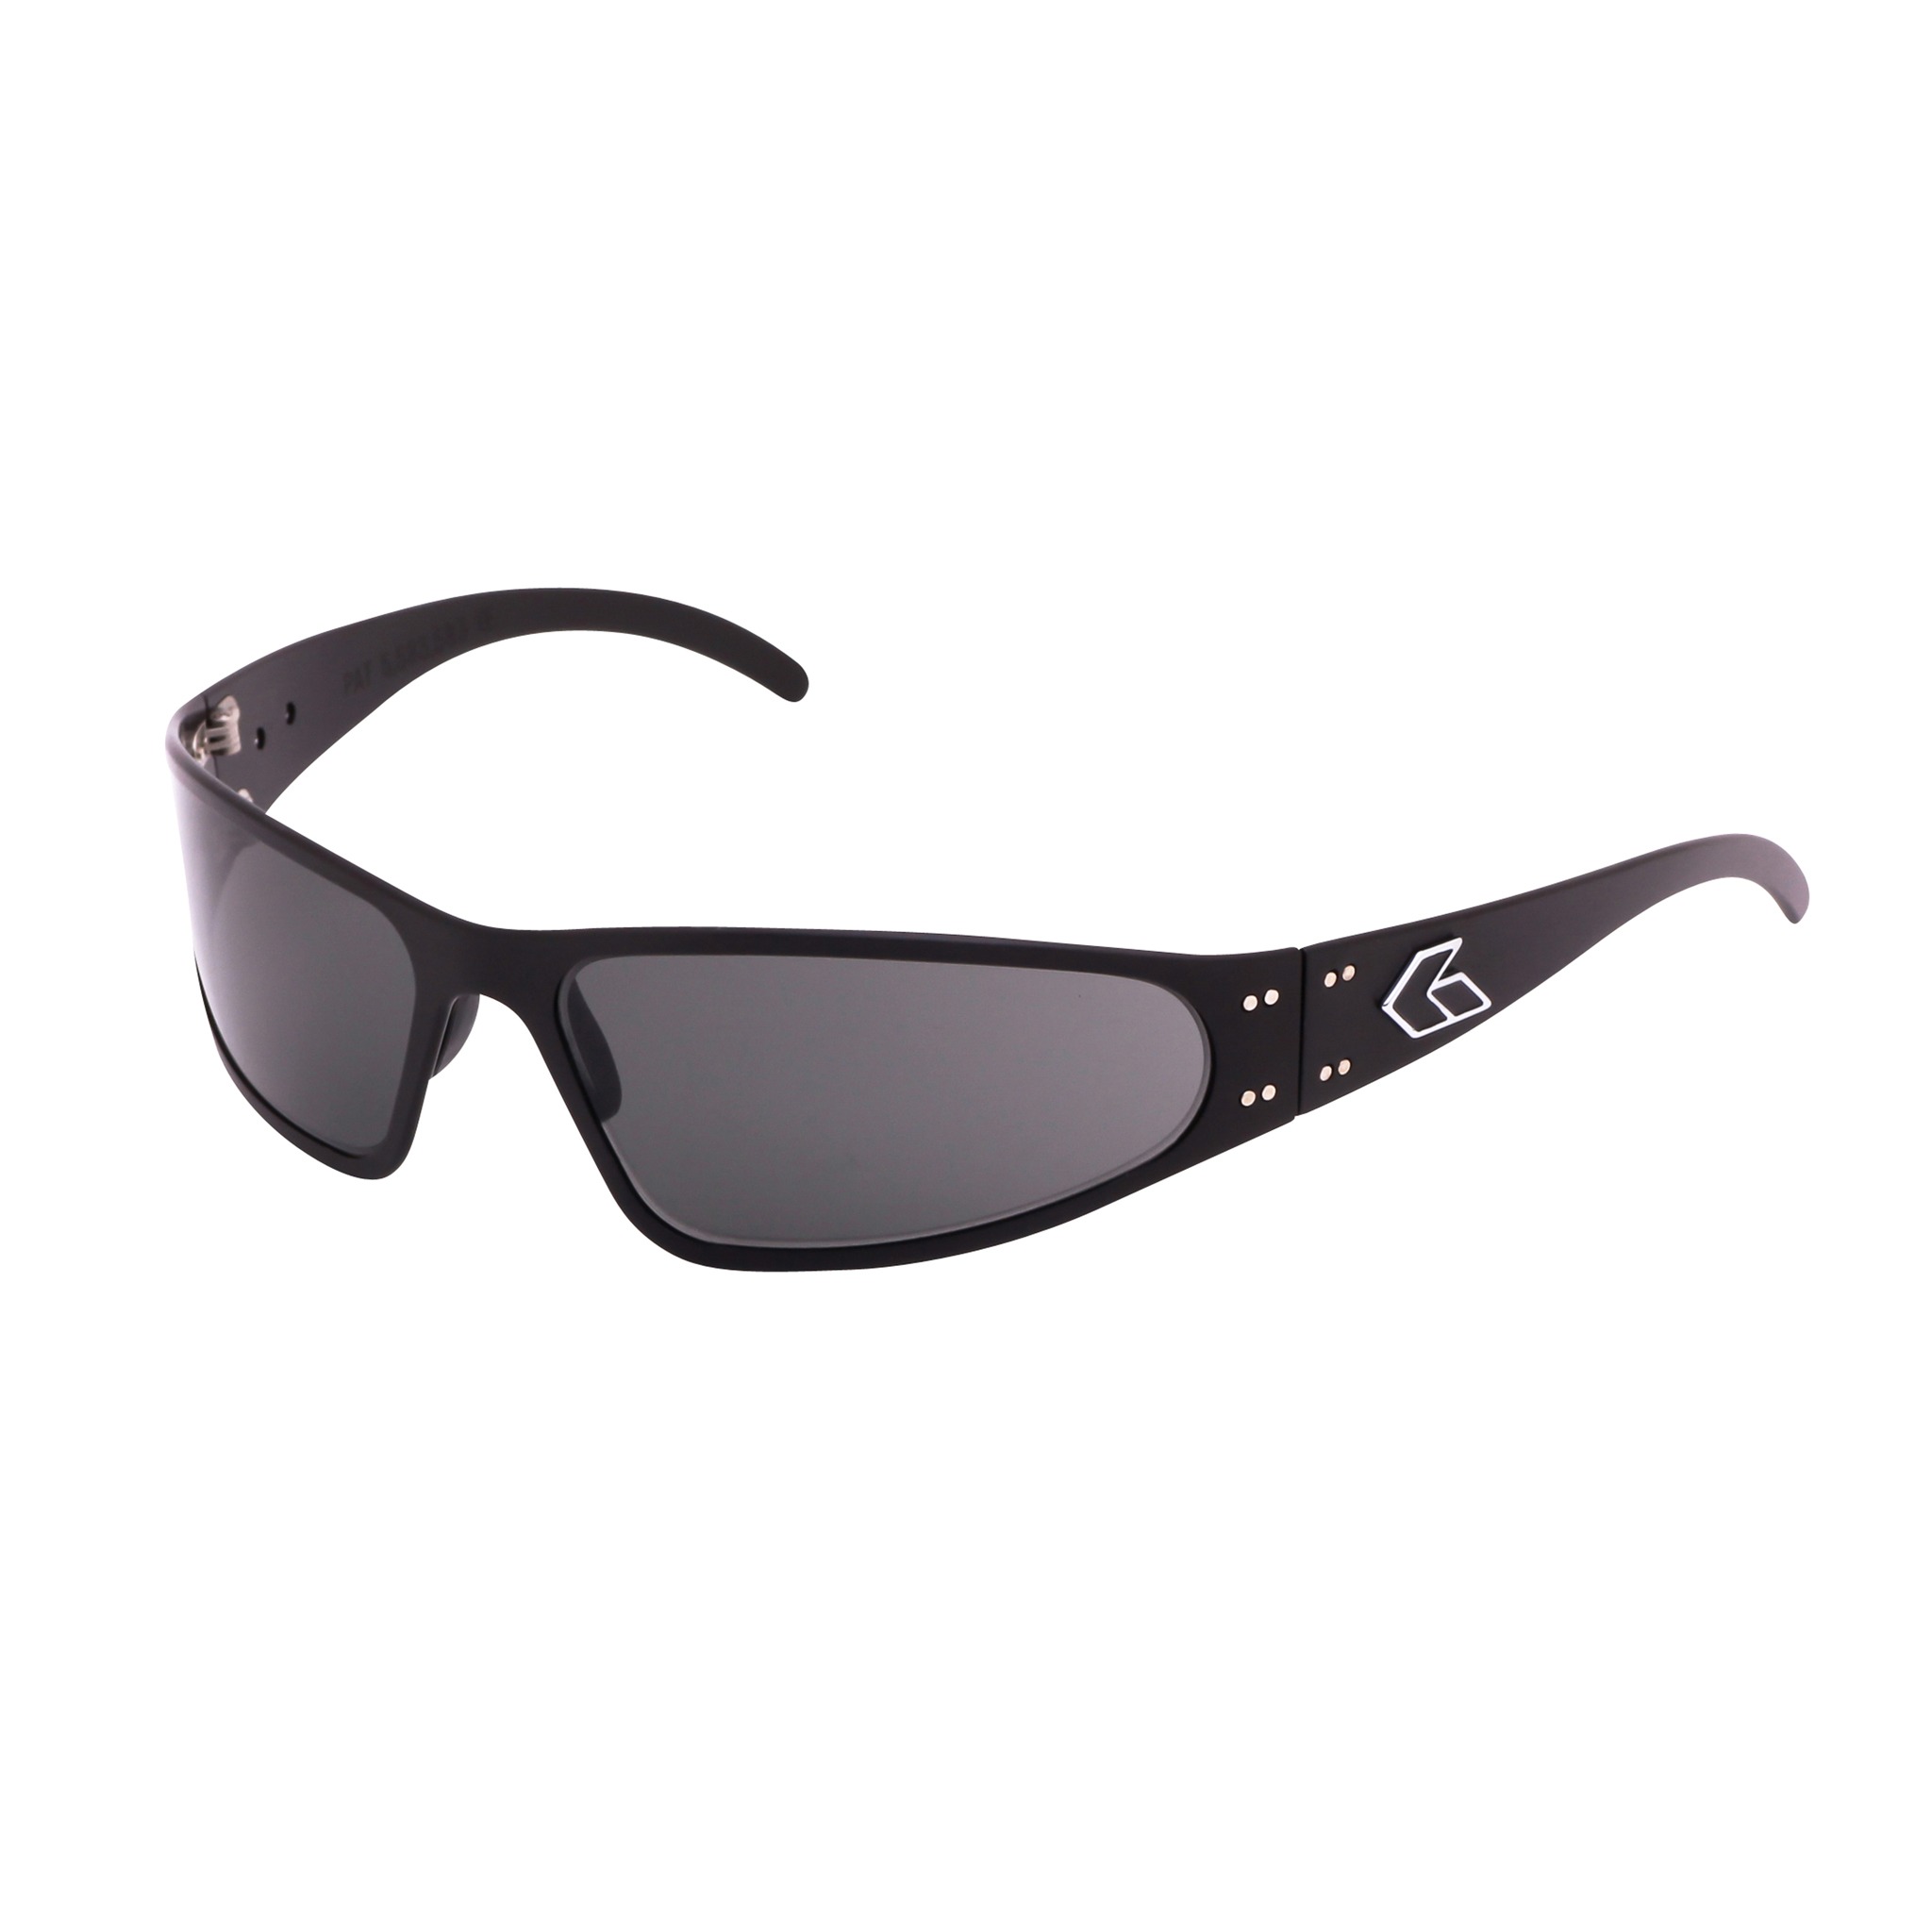 NEW Gatorz Wraptor BLACK Aluminum Scratch Resistant Yellow Lens Sunglasses 